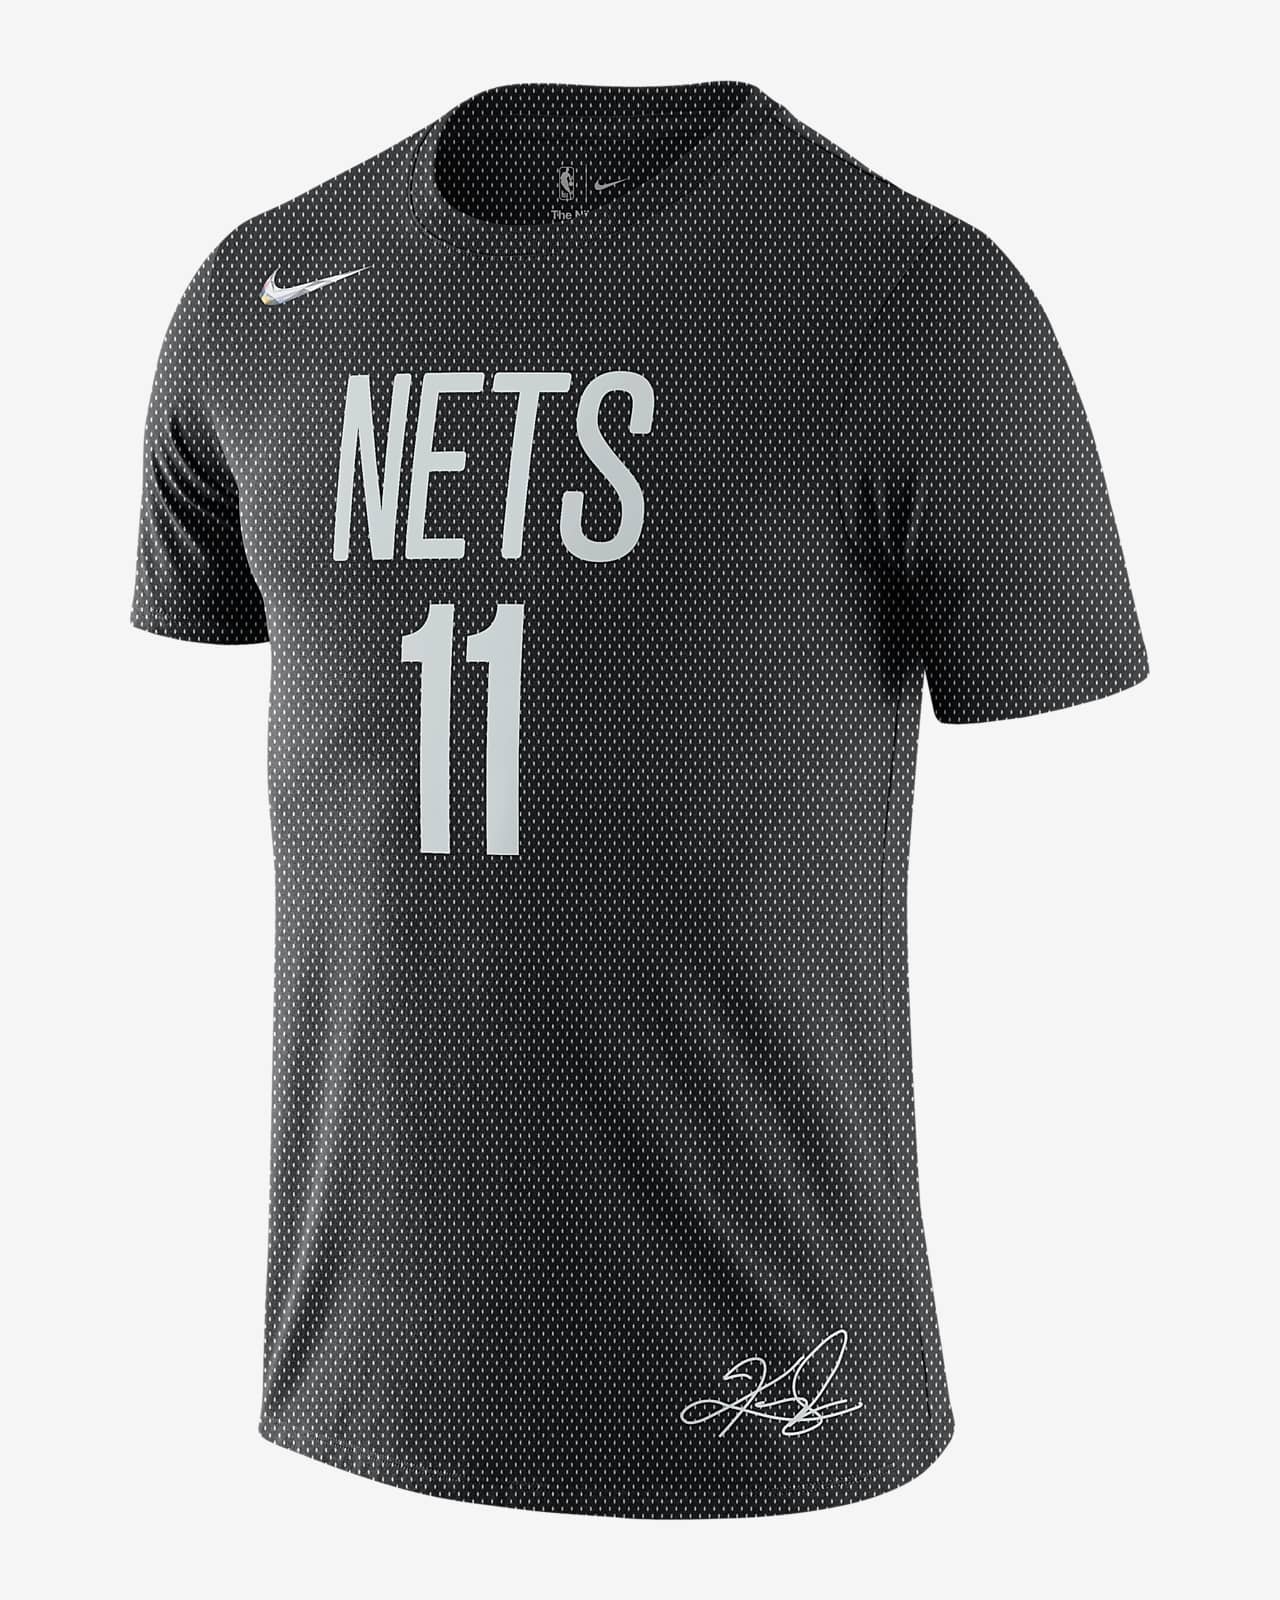 Playera Nike NBA para hombre Kyrie Irving Nets